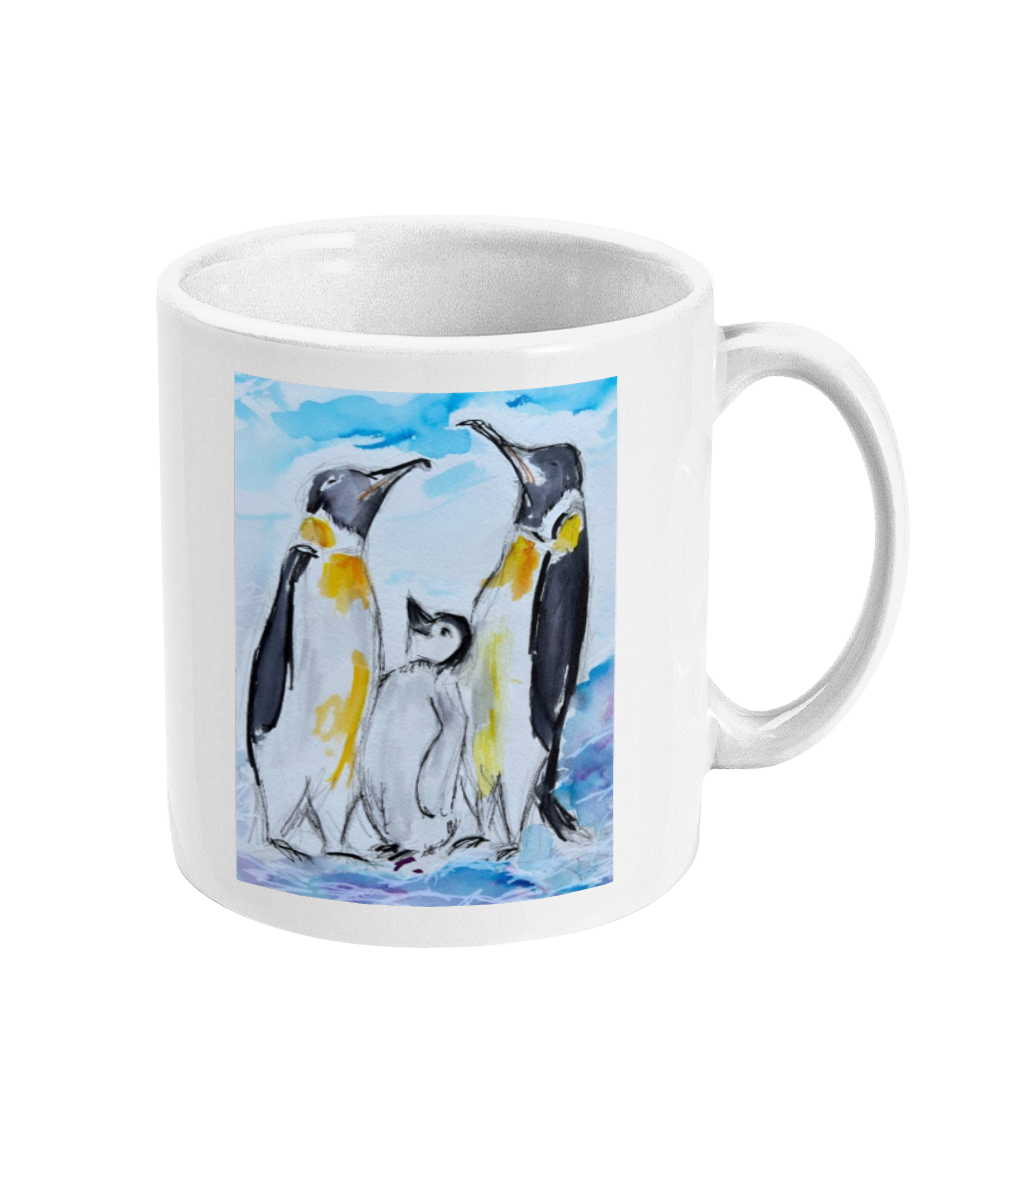 Mug with Penguins